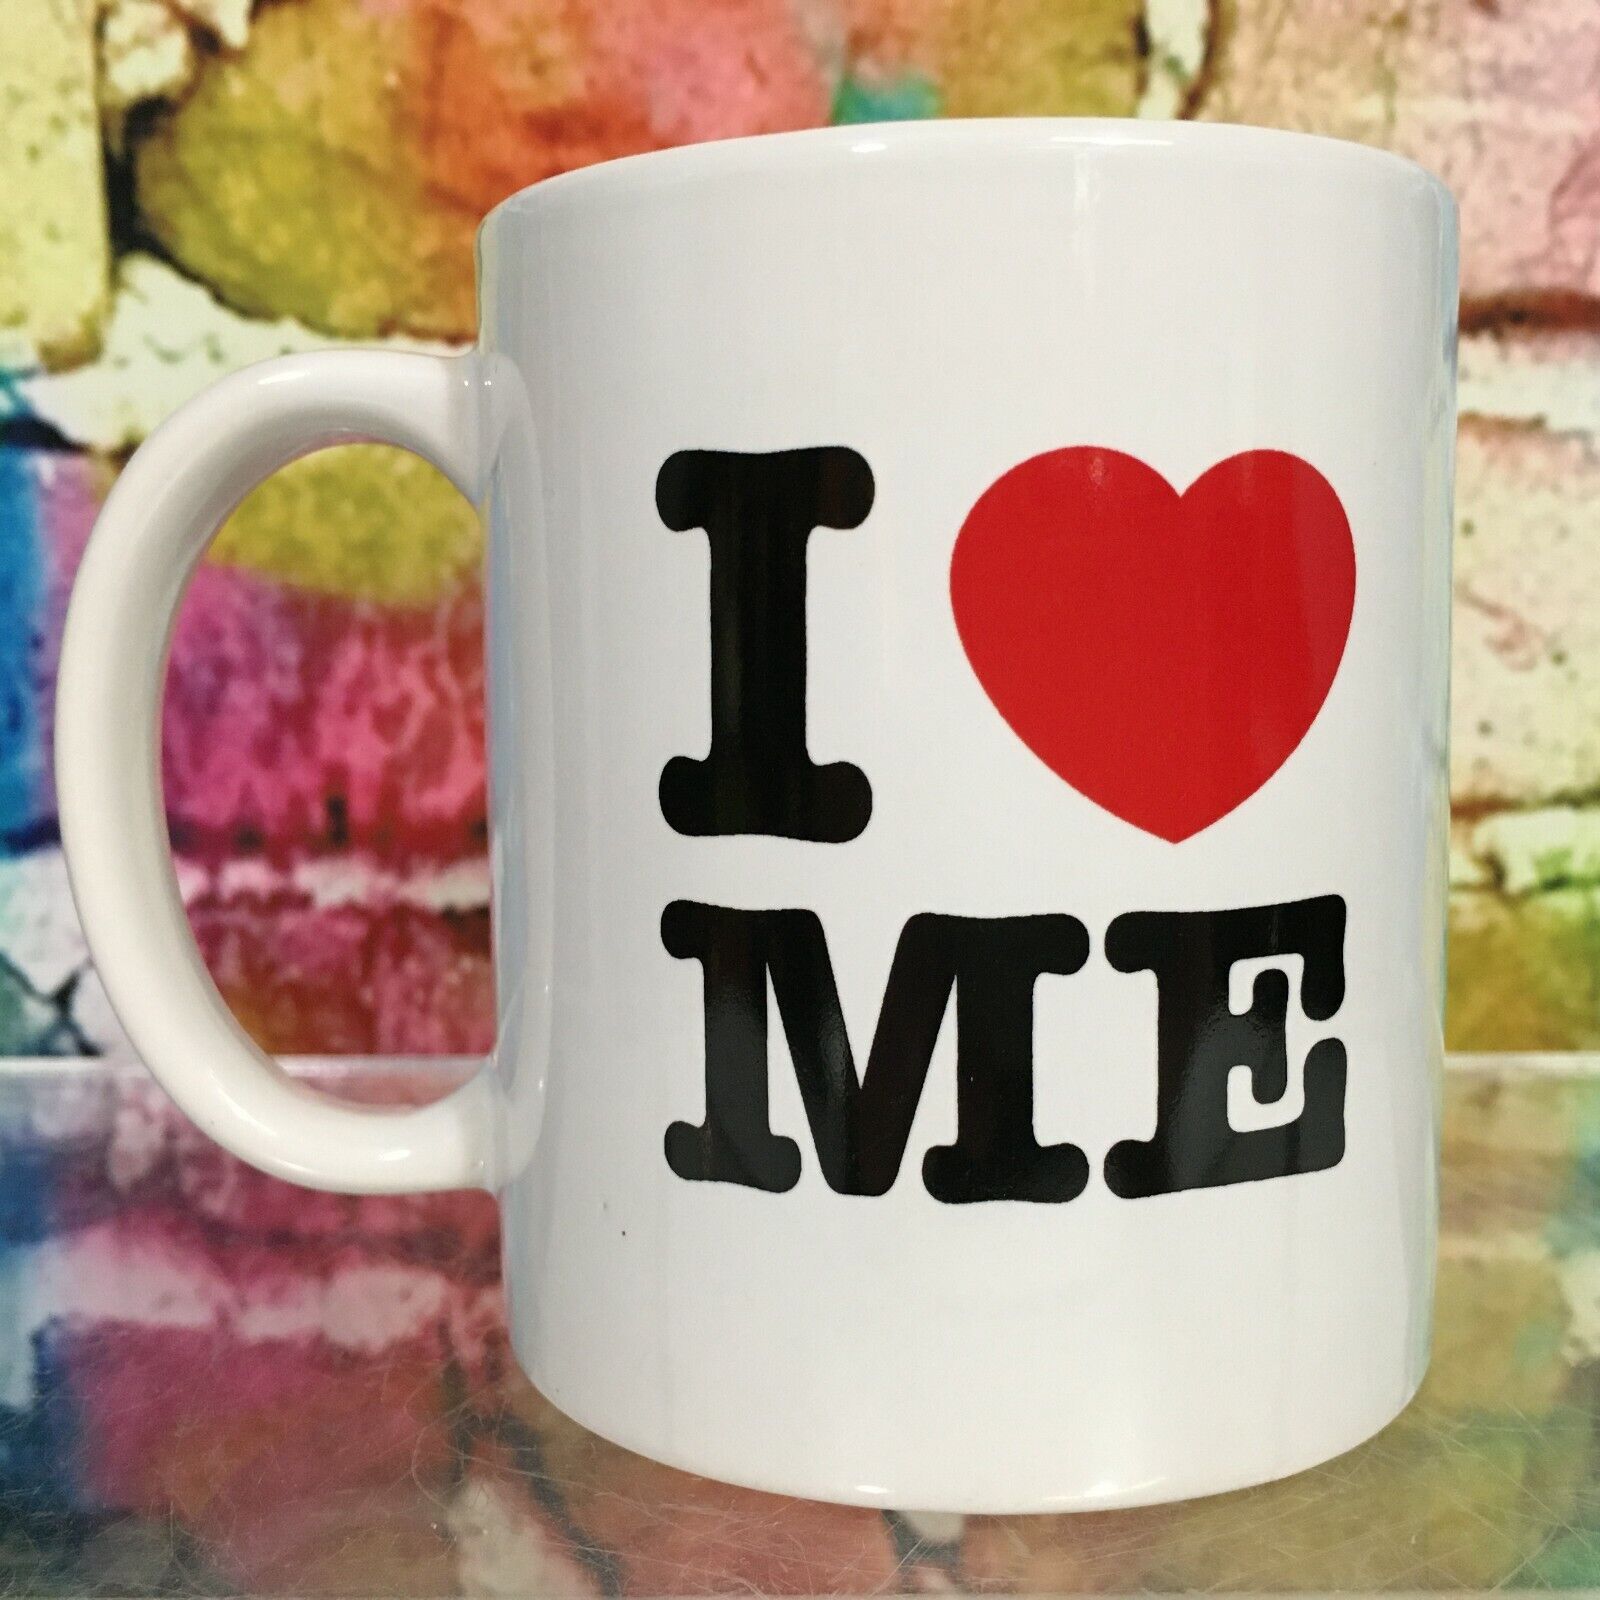 I Love Me Coffee Mug Tea Cup Heart Vain Narcissism Arrogant Ego Proud Humorous